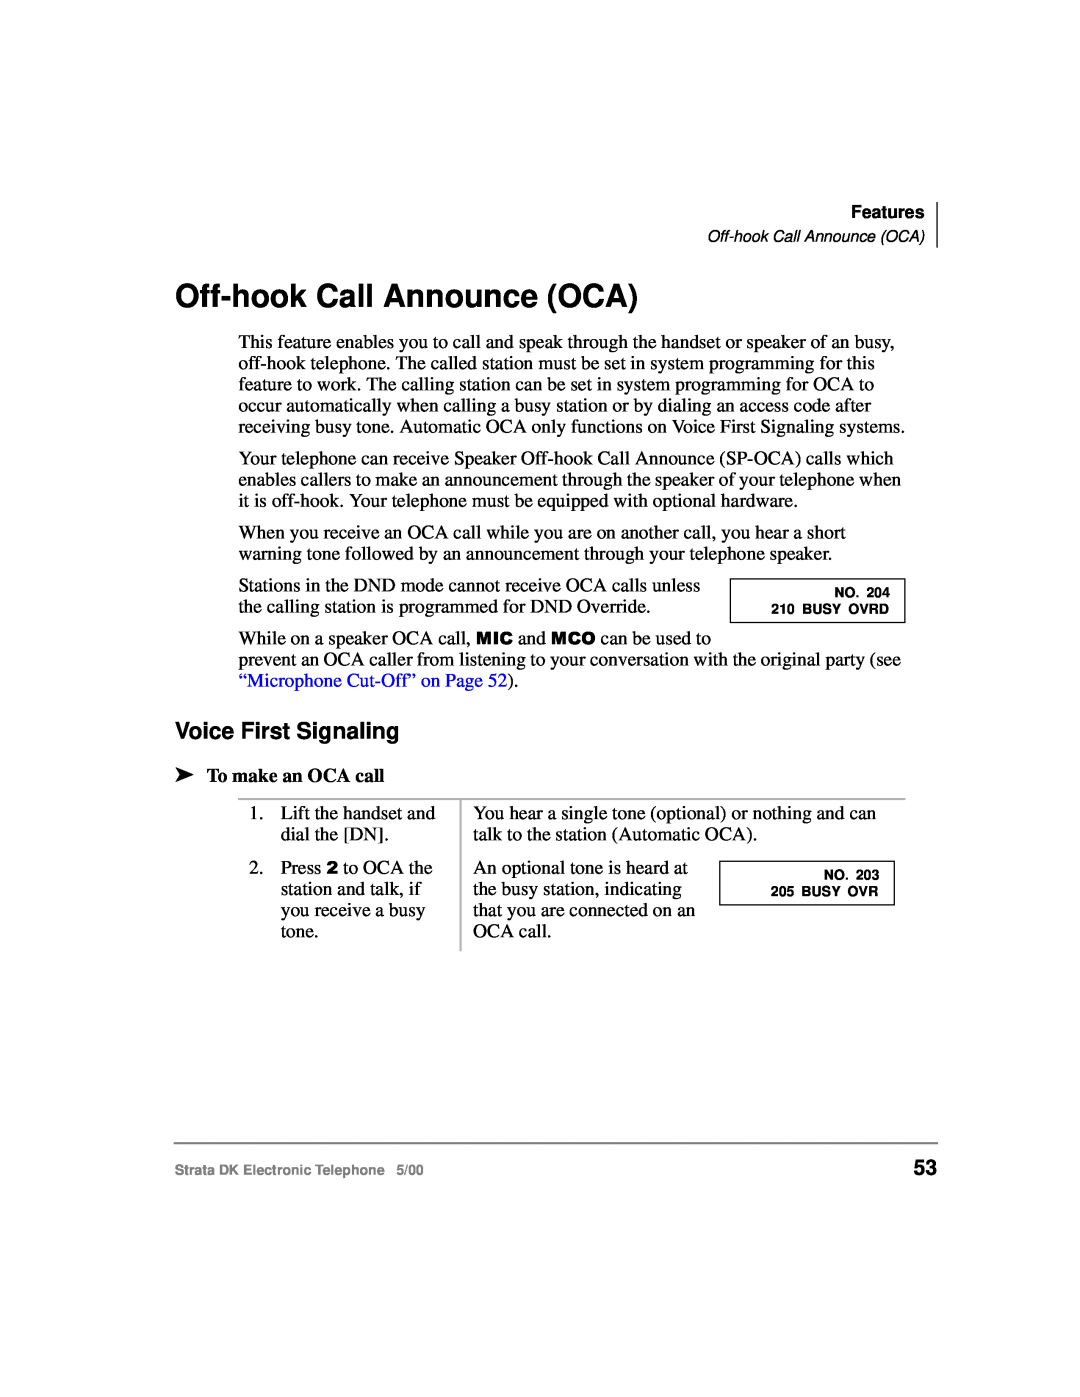 Toshiba Strata DK manual Off-hook Call Announce OCA, Voice First Signaling, To make an OCA call 